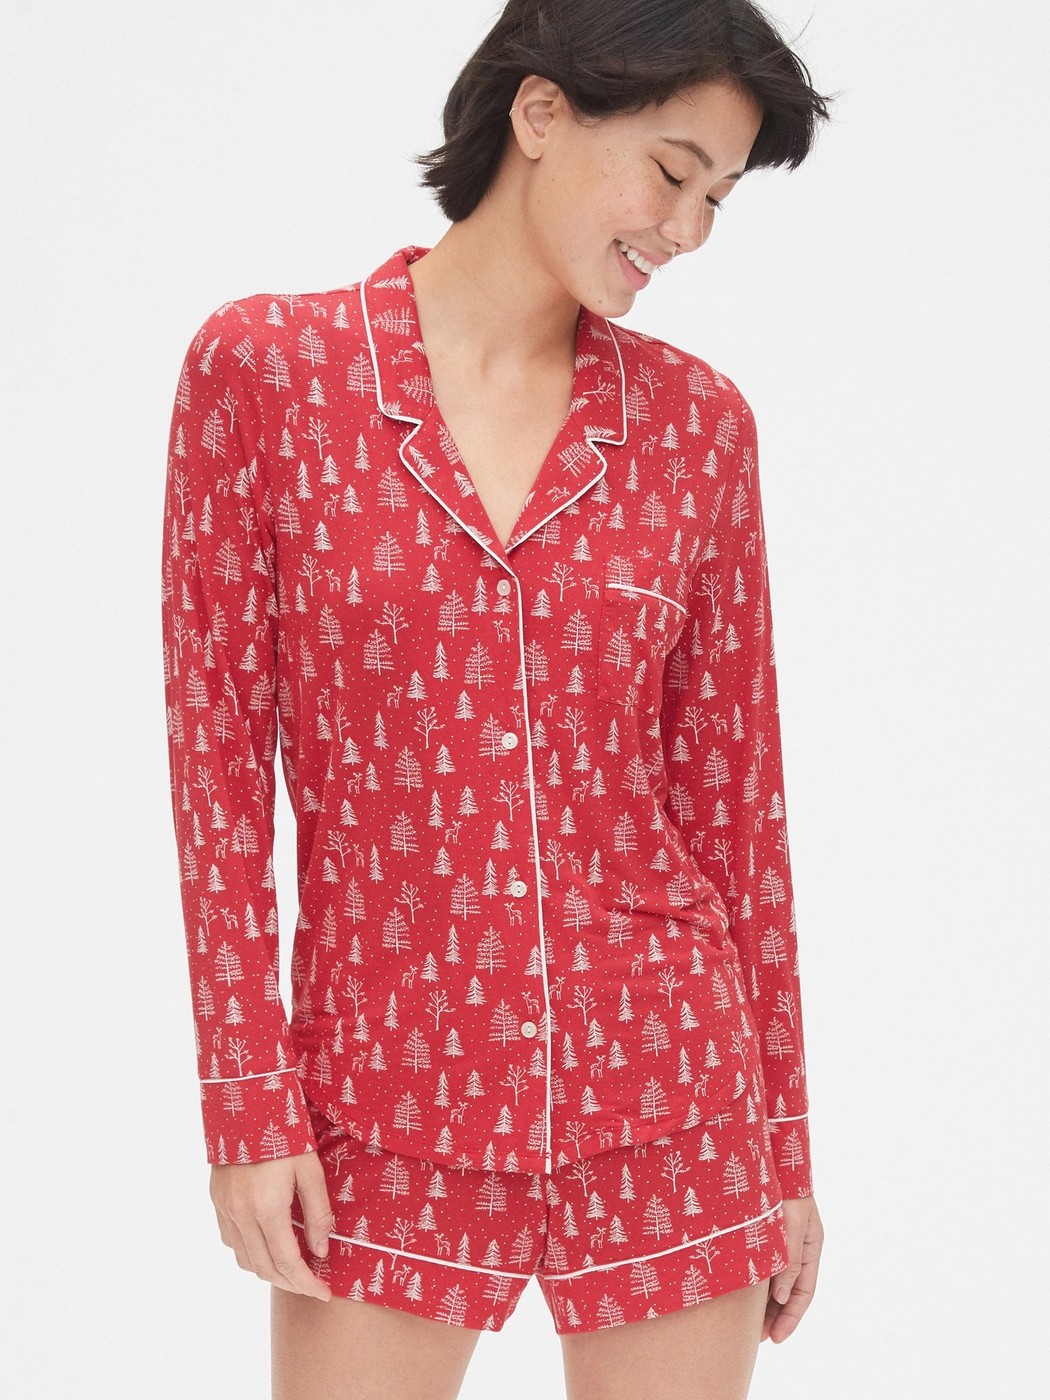 Женская пижама для сна GAP (Женская рубашка - рубашка, шорты), M, M